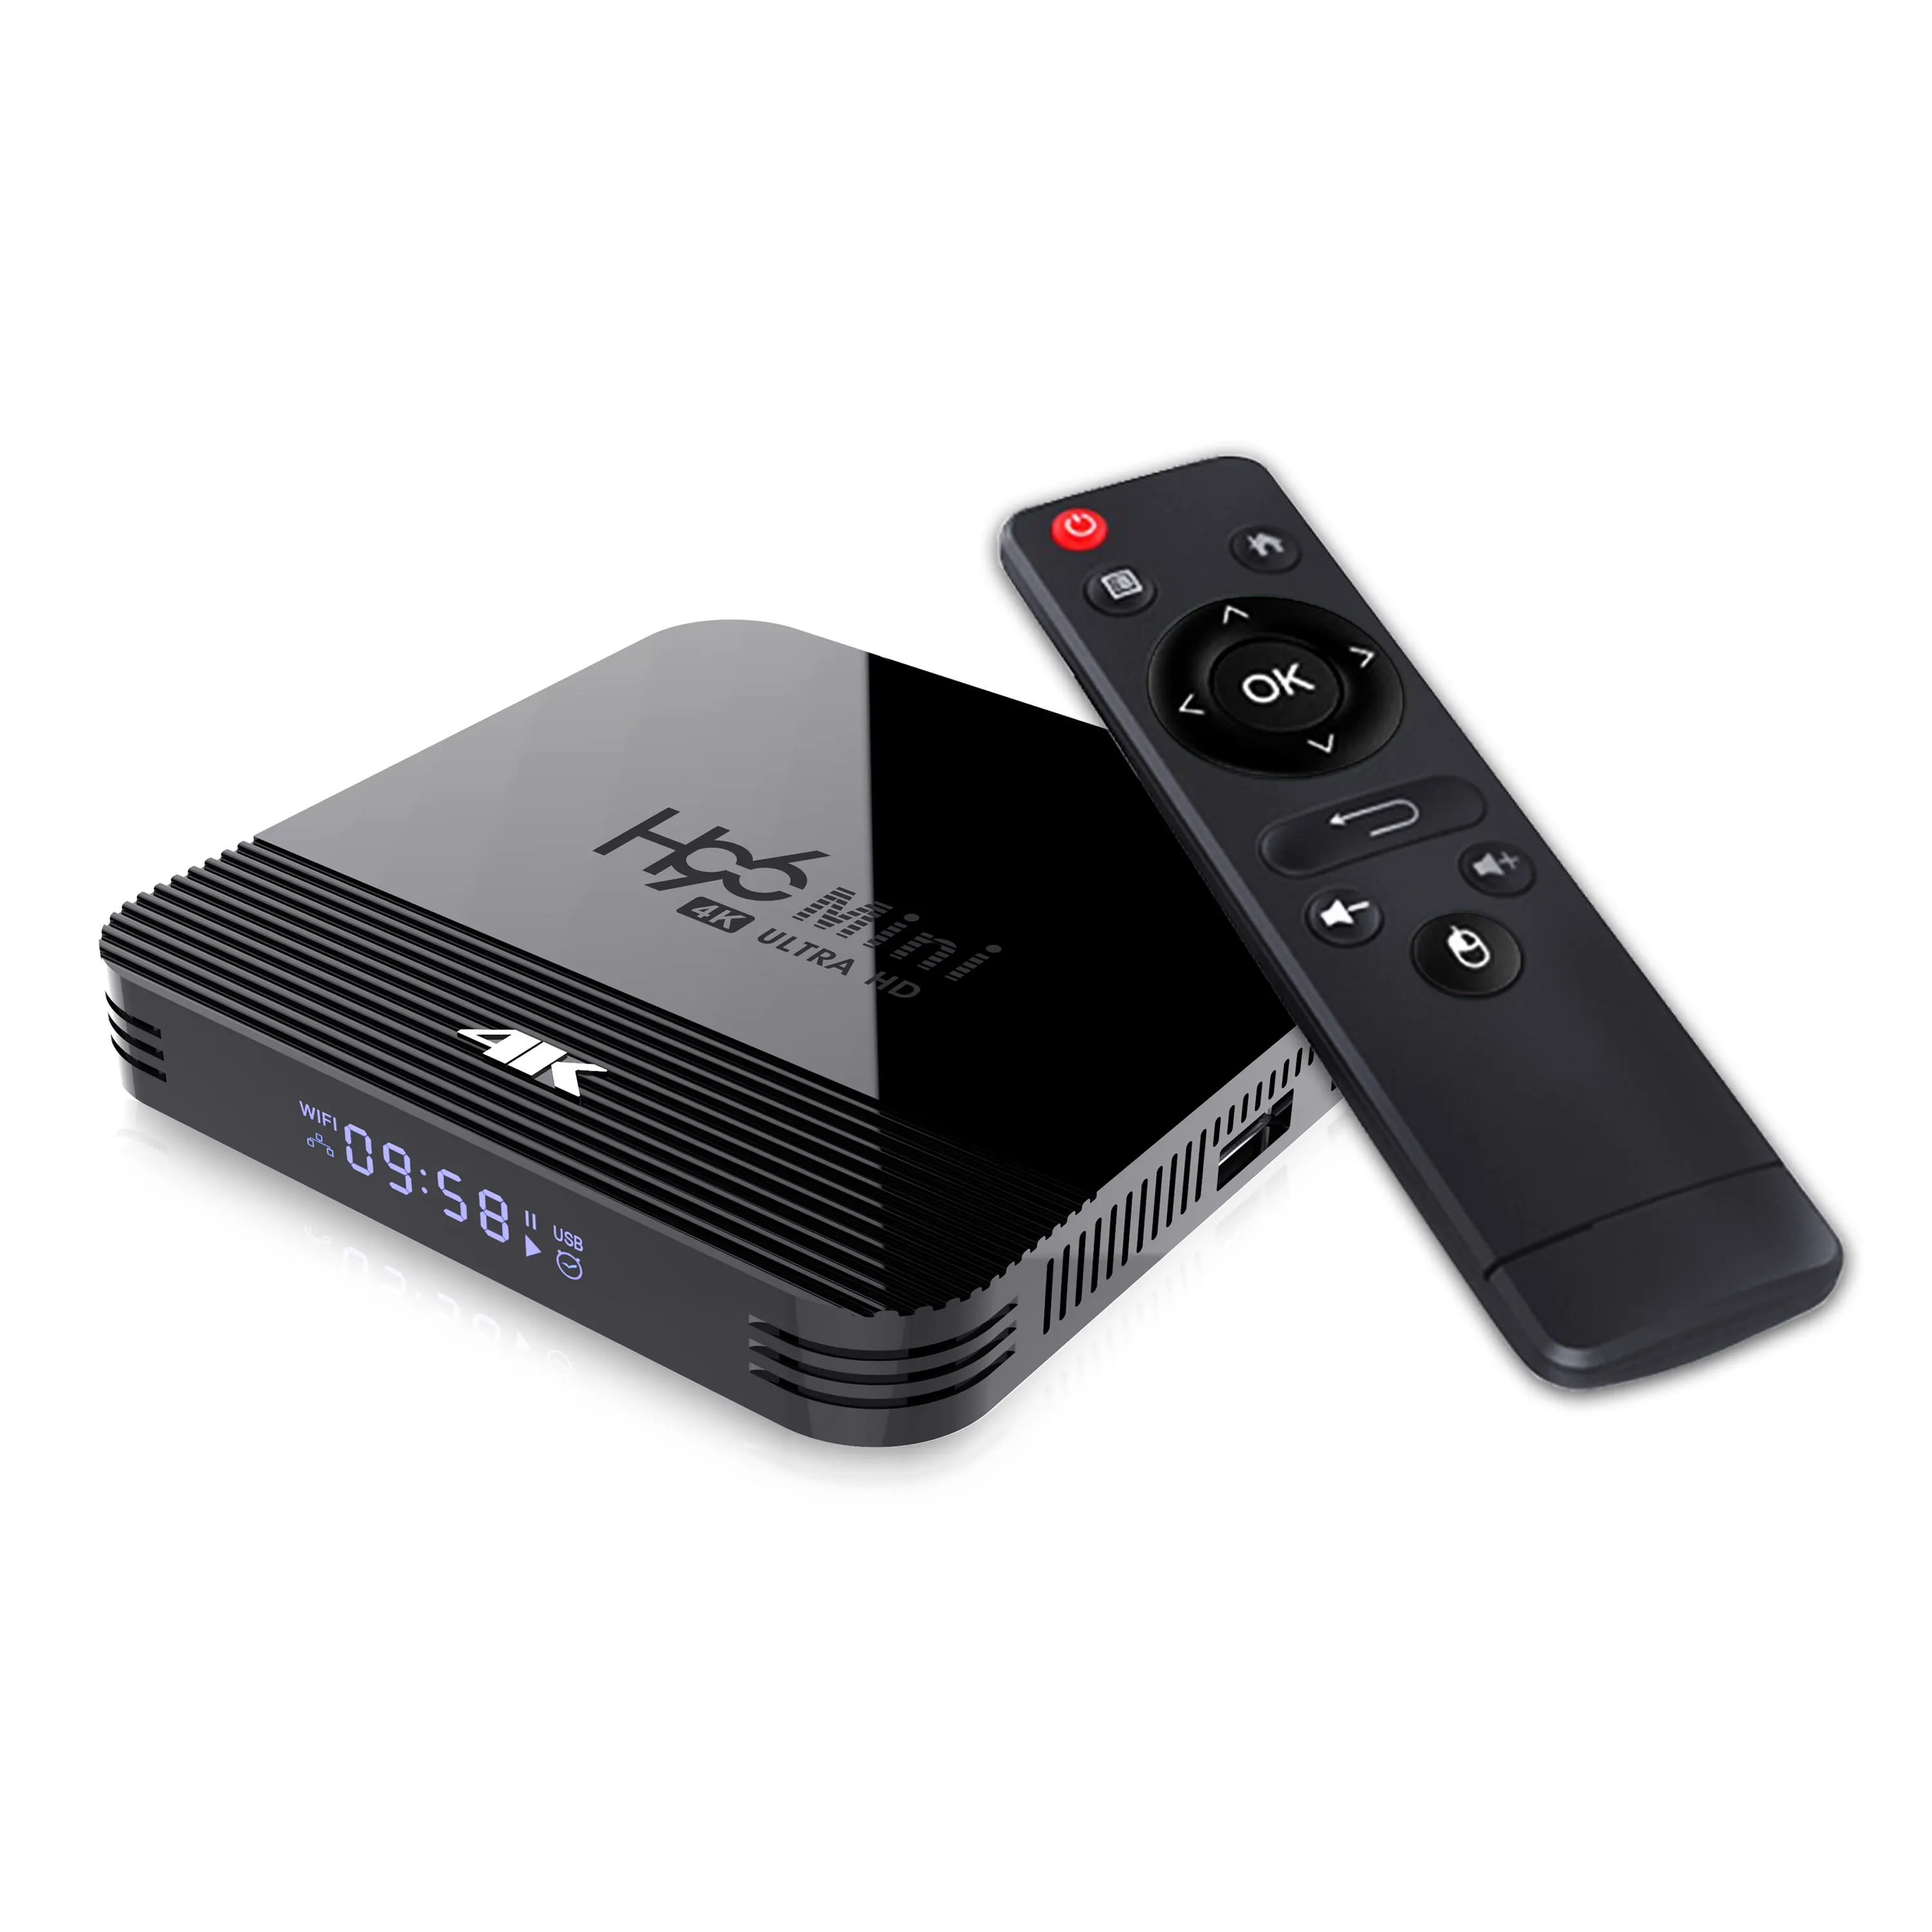 Costo-efficace personalizza il download del software android smart internet tv free to air cavo set top box H96 mini h8